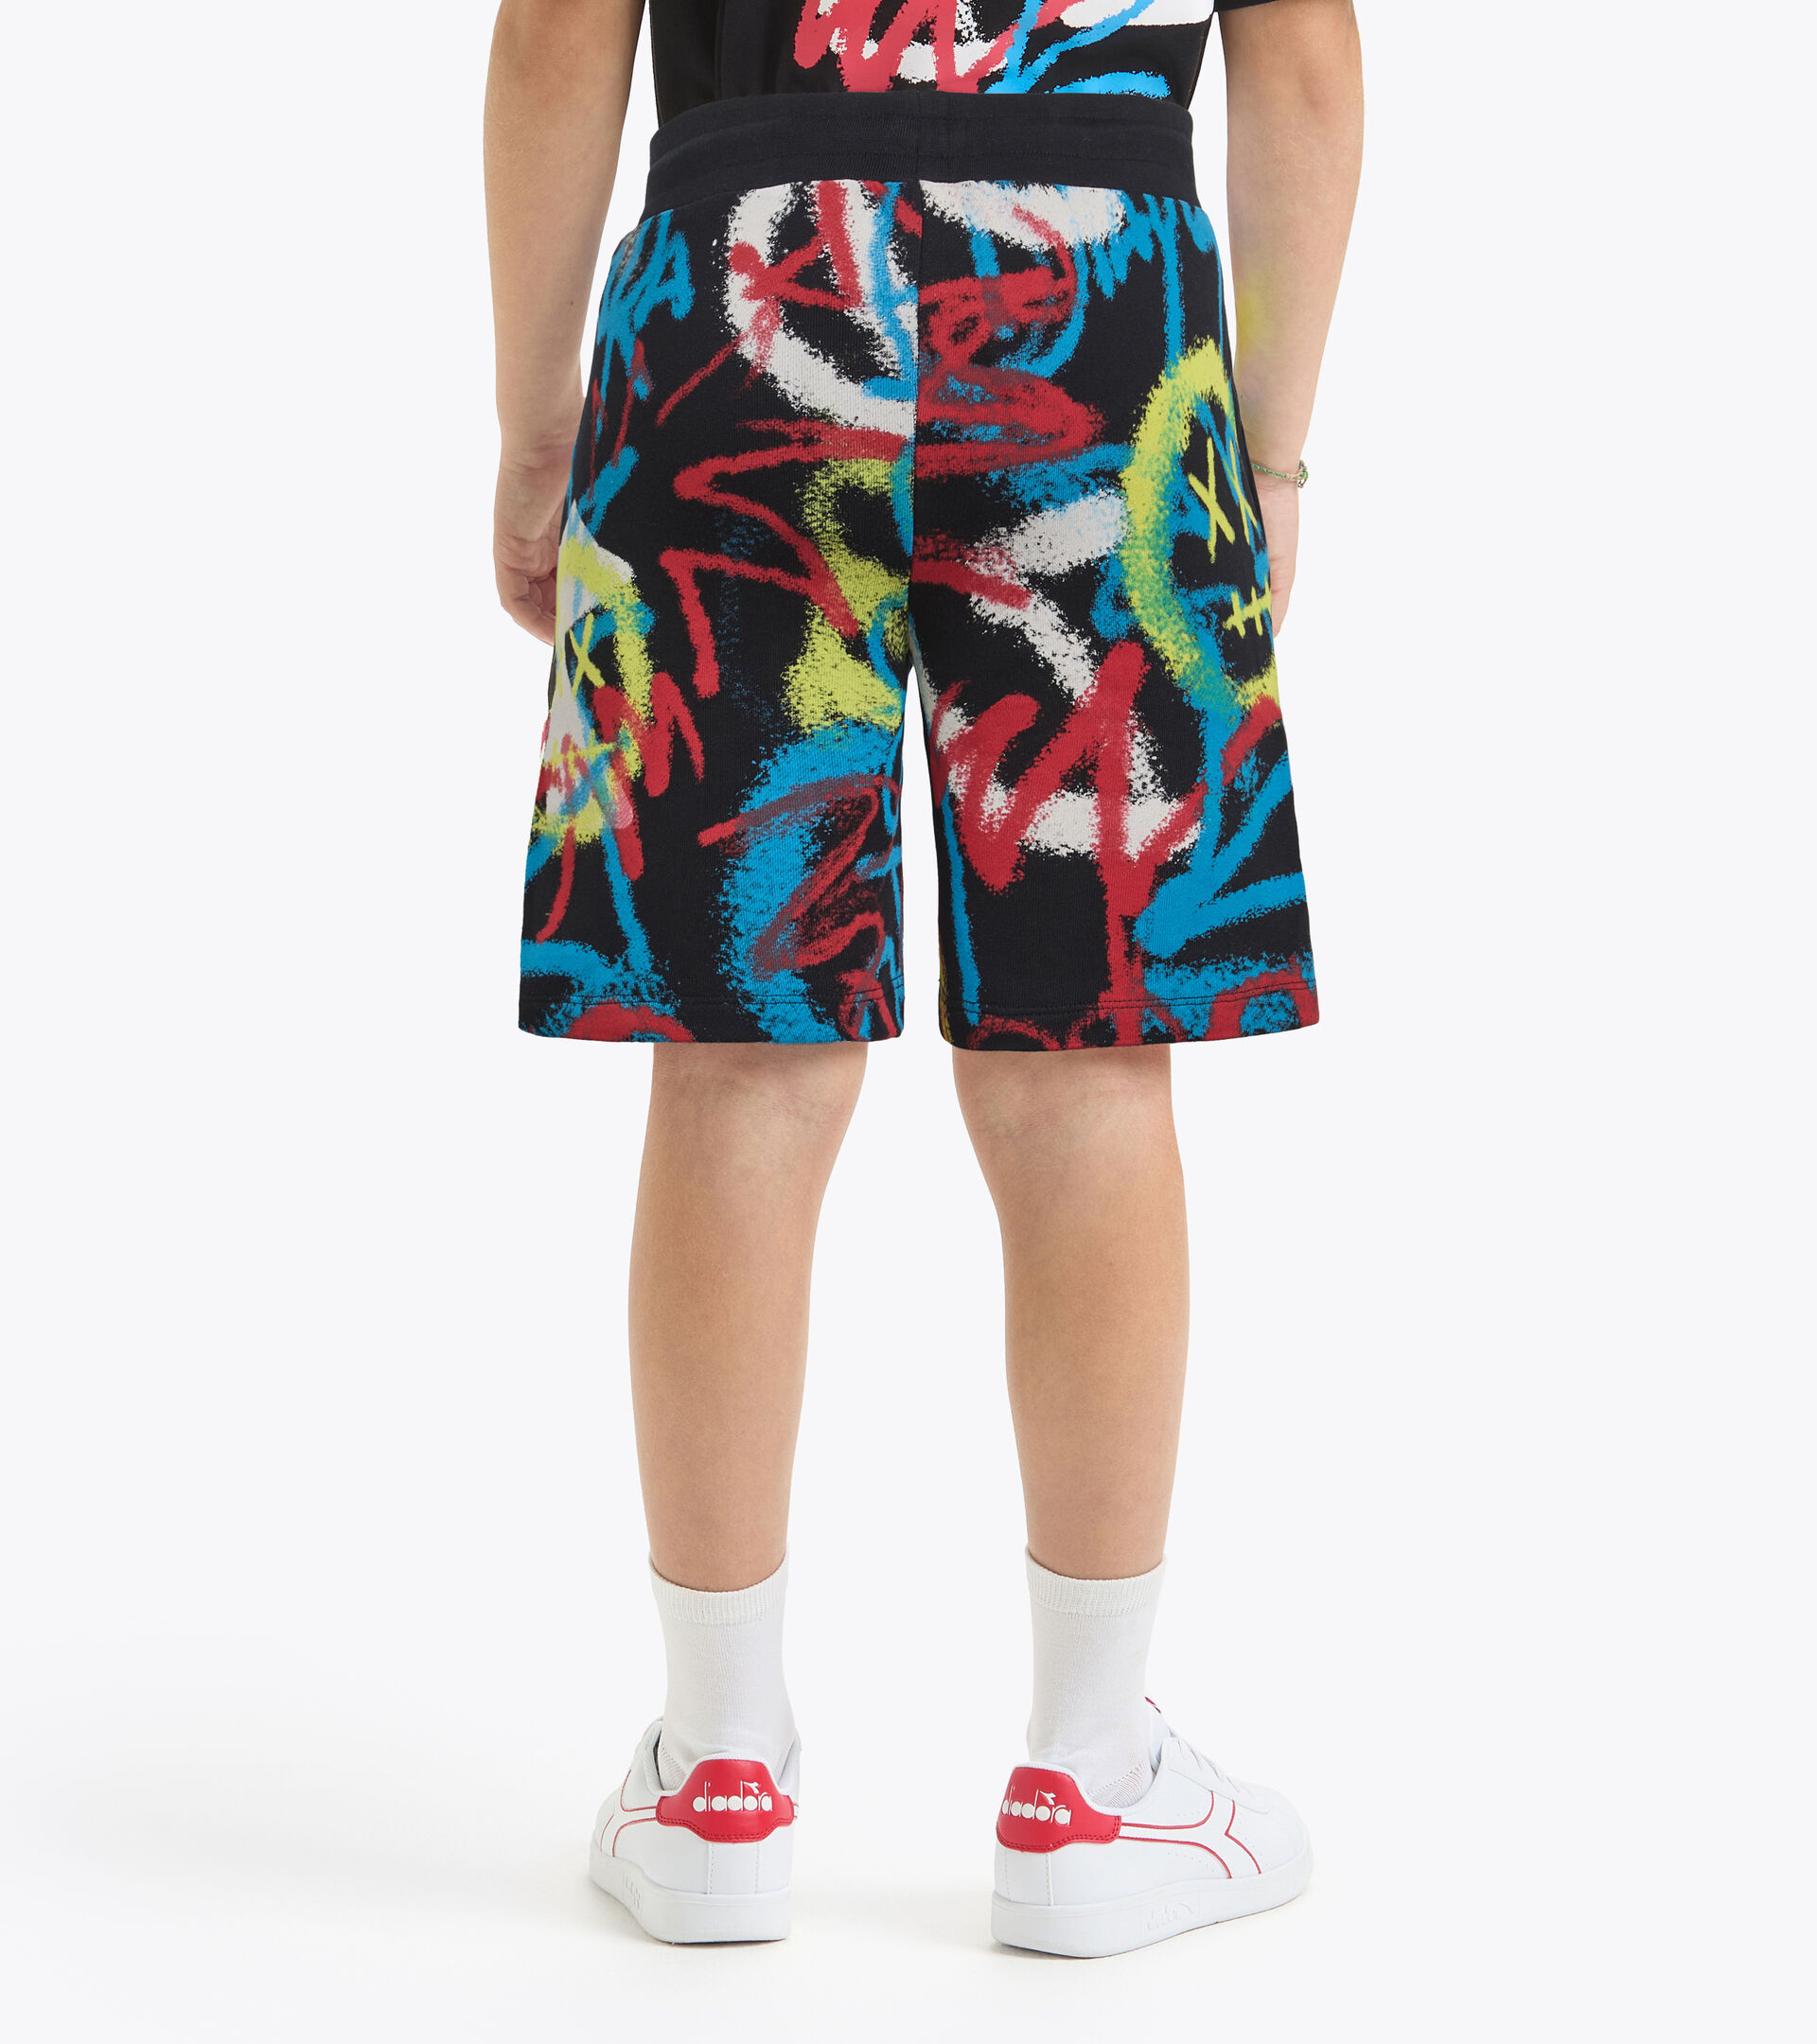 Bermuda shorts - Graffiti-inspired print - Boy
 JB. BERMUDA GRAFFITI BLACK - Diadora